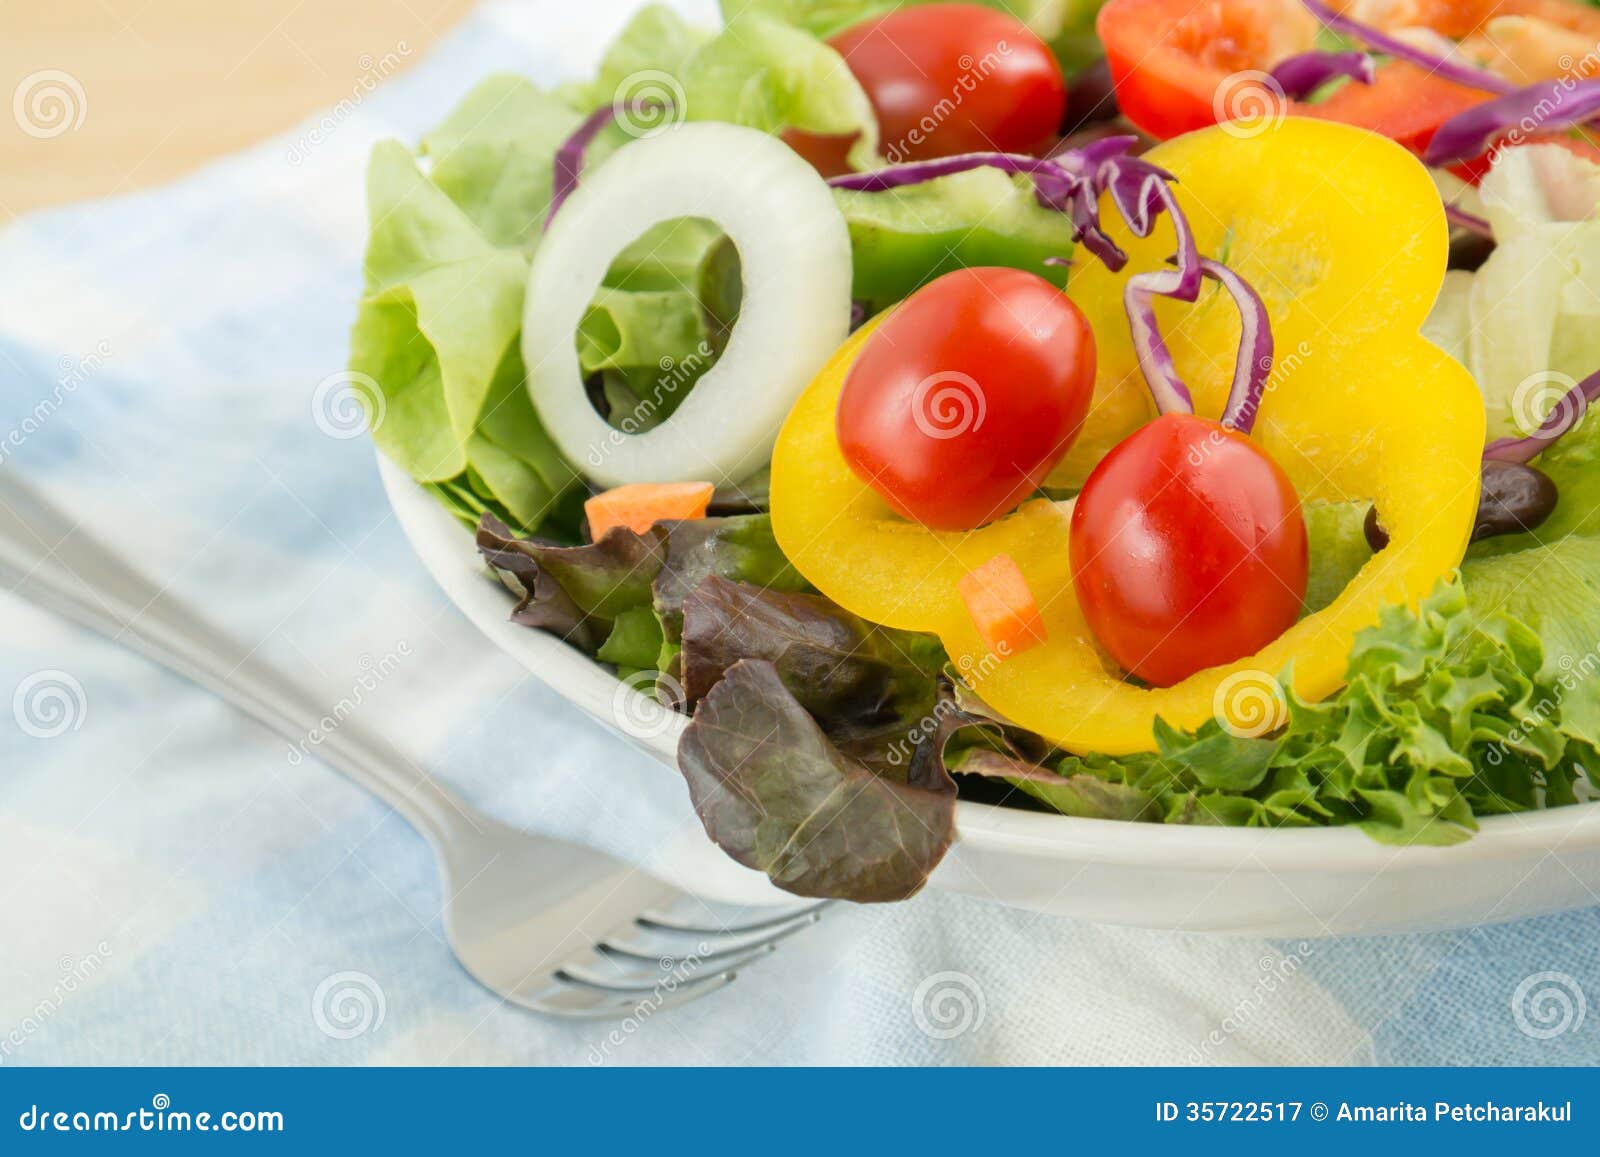 Fresh Vegetable Salad on Plate Stock Image - Image of health, fabric ...